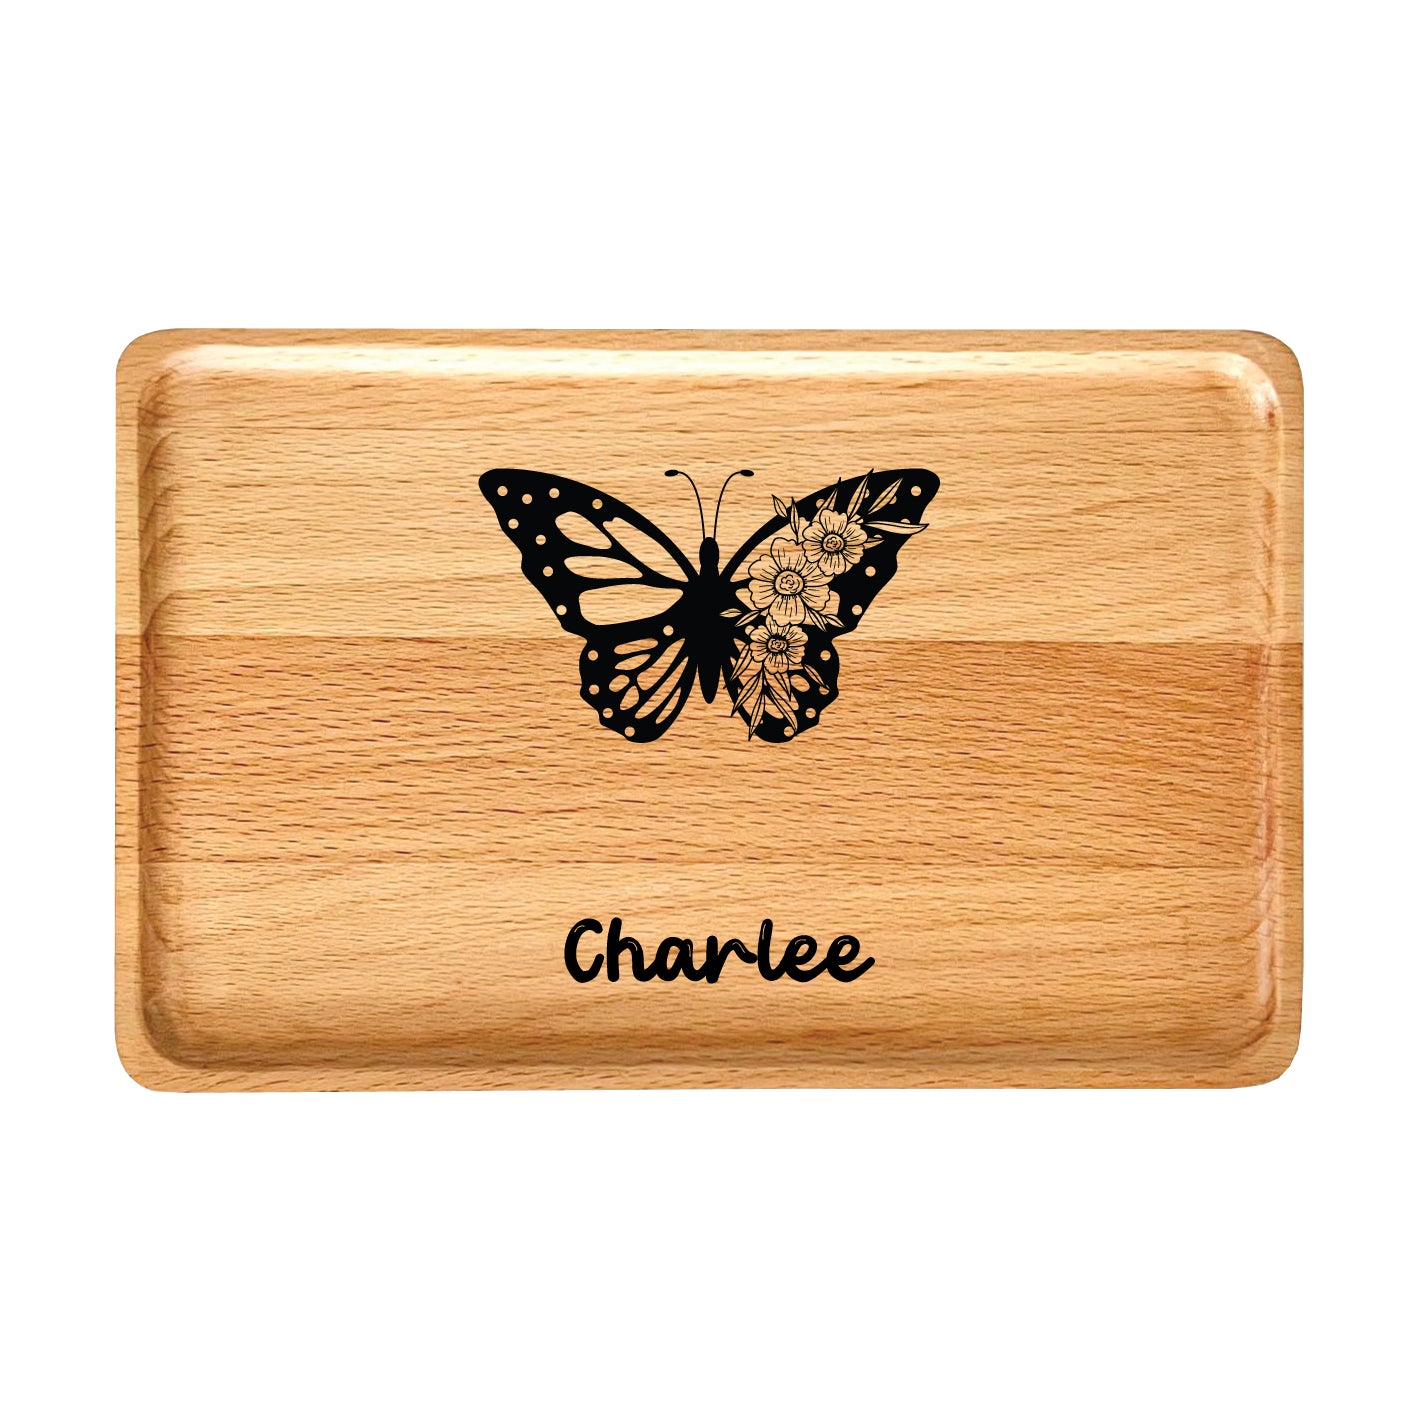 Charlee Jewellery Box